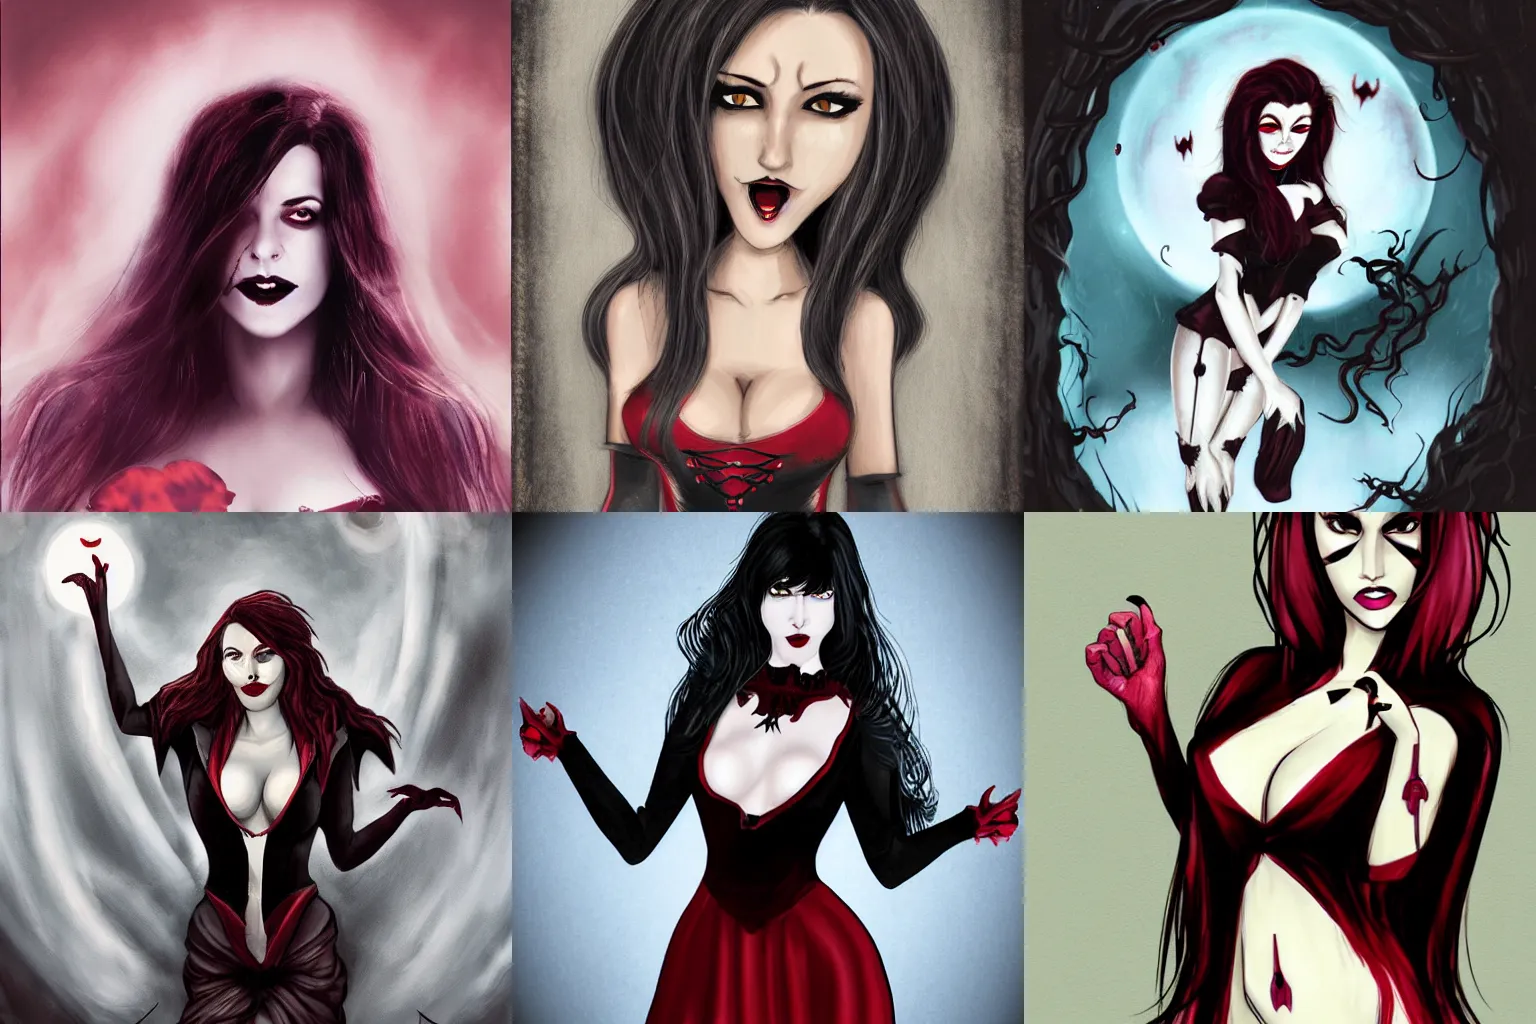 Prompt: Vampire woman